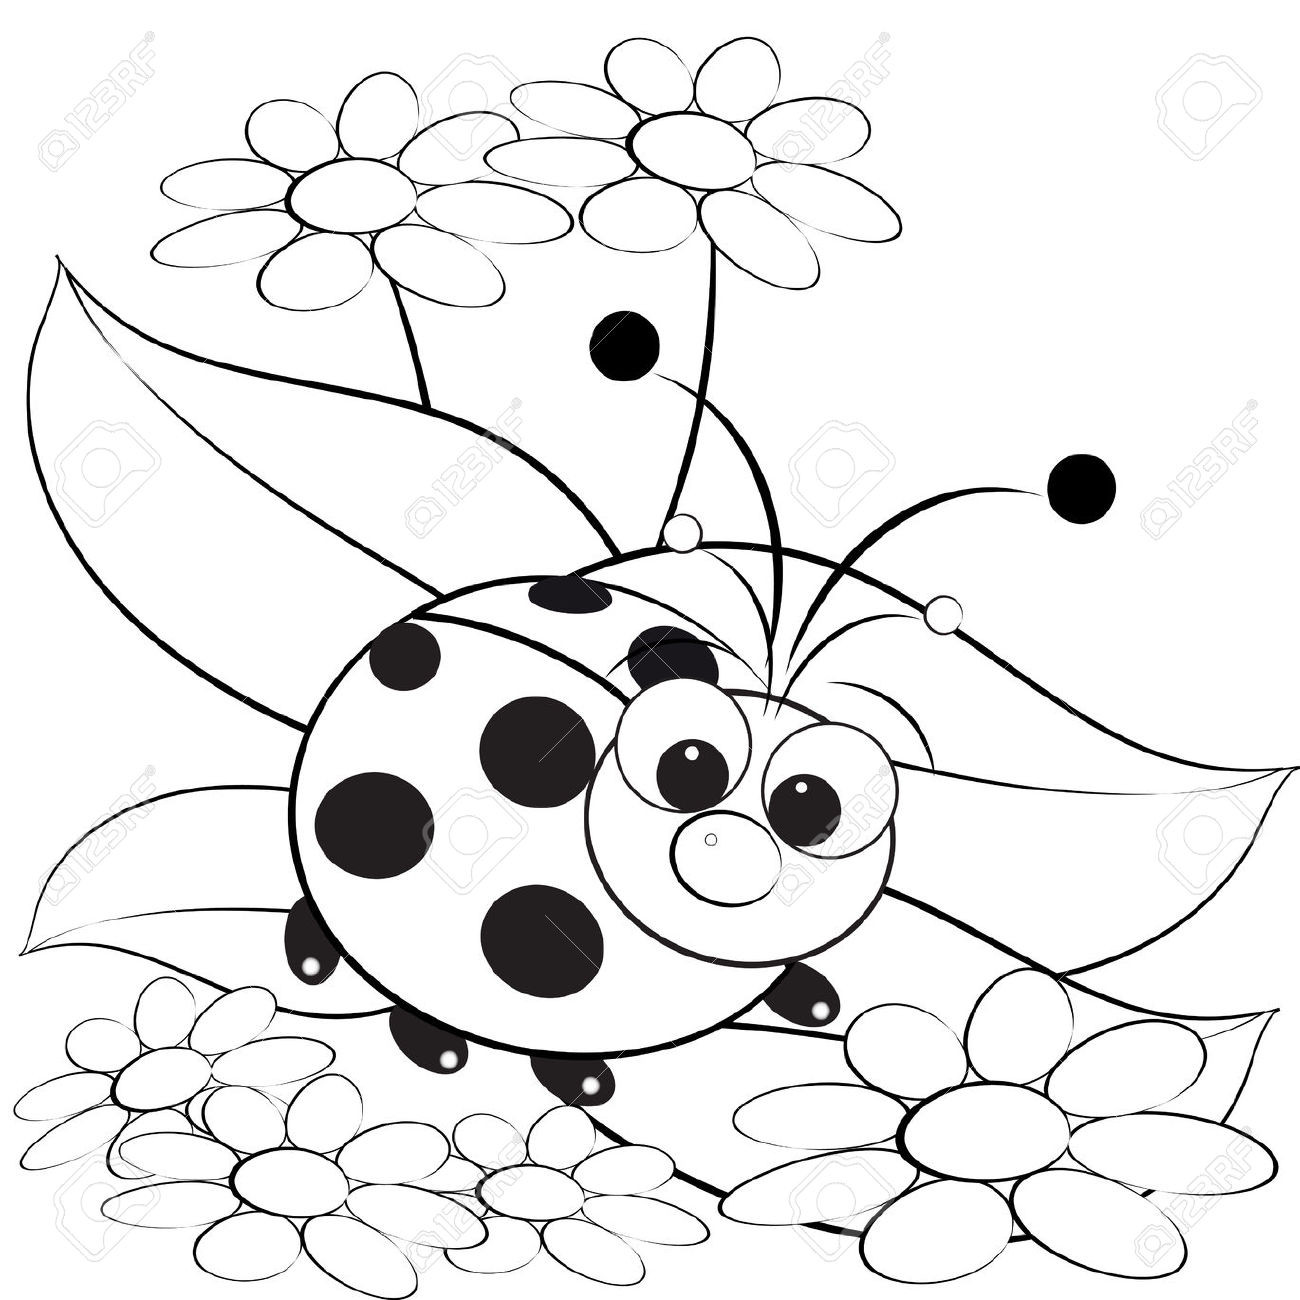 Ladybug Printable Coloring Pages
 Ladybug Drawing For Kids at GetDrawings